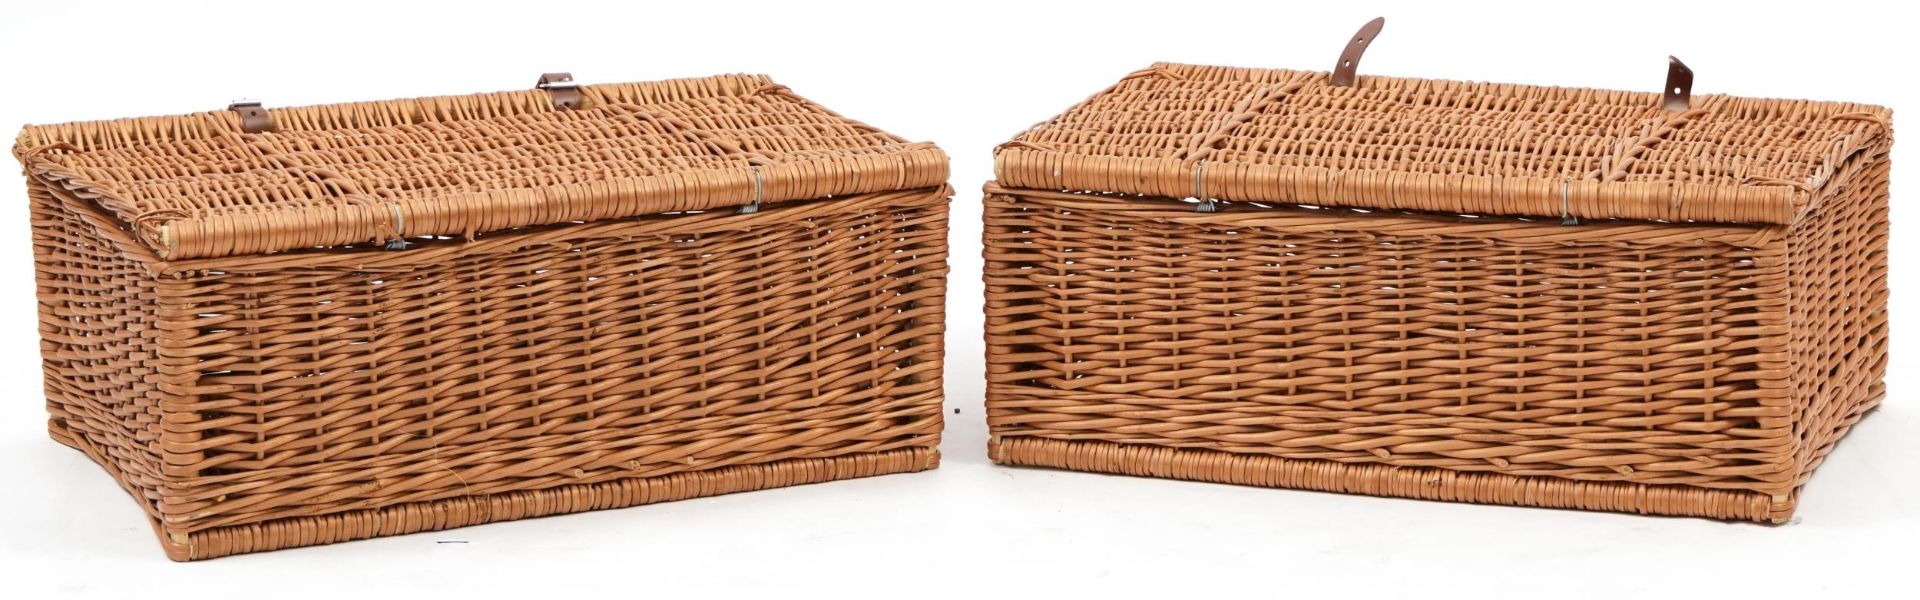 Two wicker picnic hampers, 23cm H x 57cm W x 38cm D - Image 3 of 3